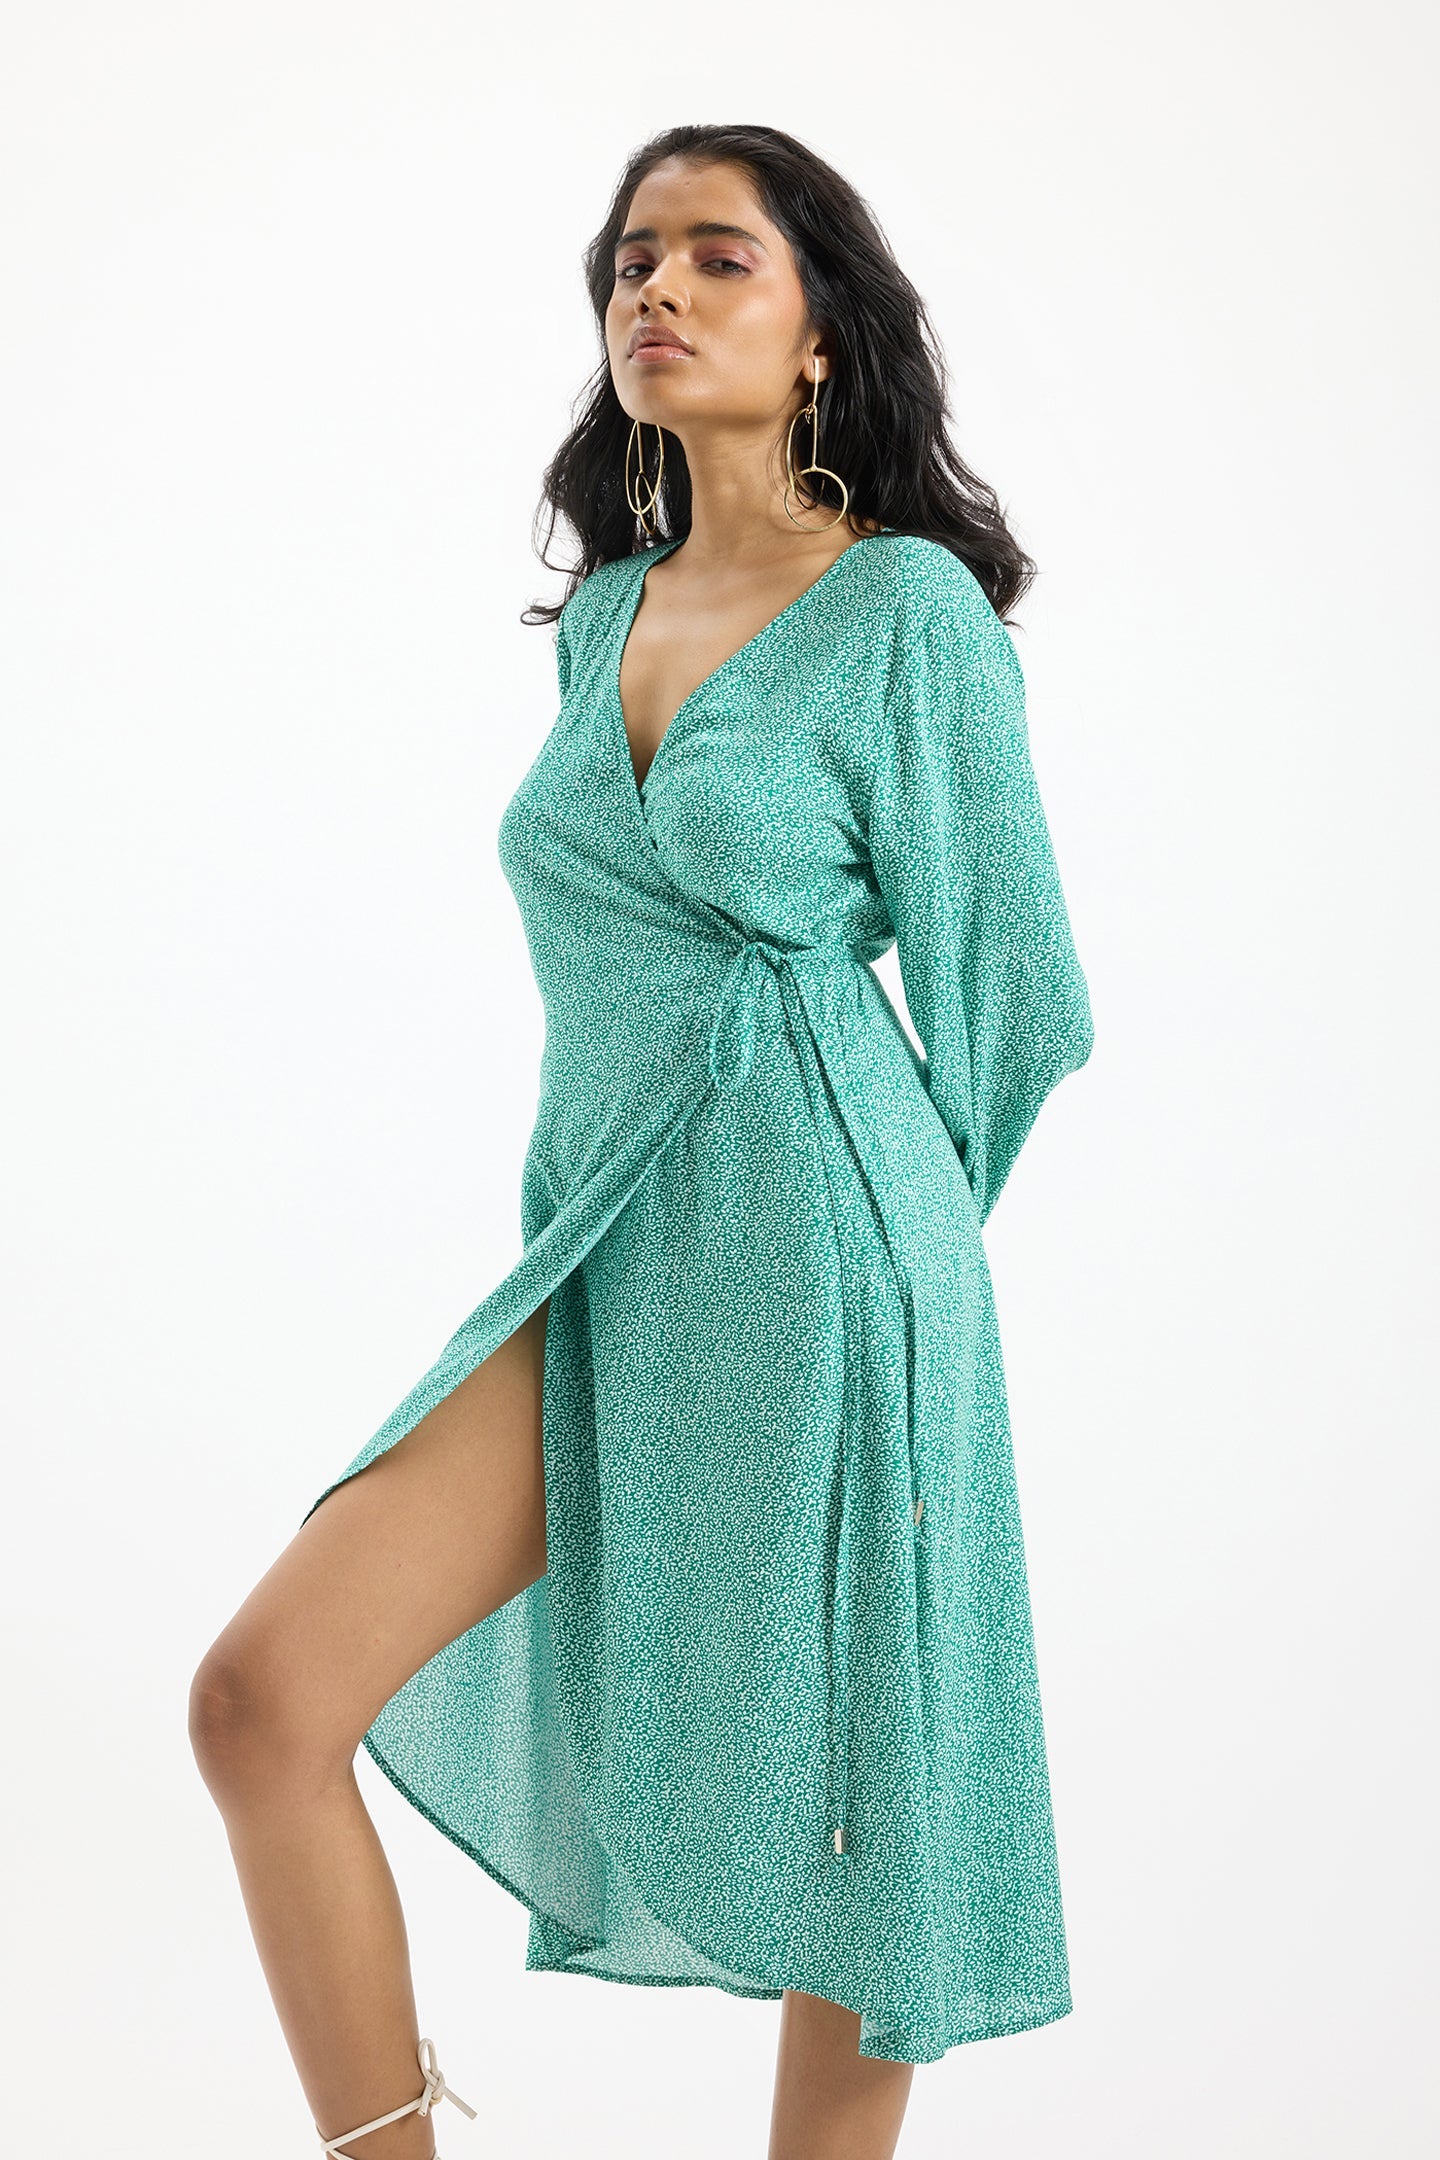 Parva|Blossom & Blouson Green Dress with Pockets